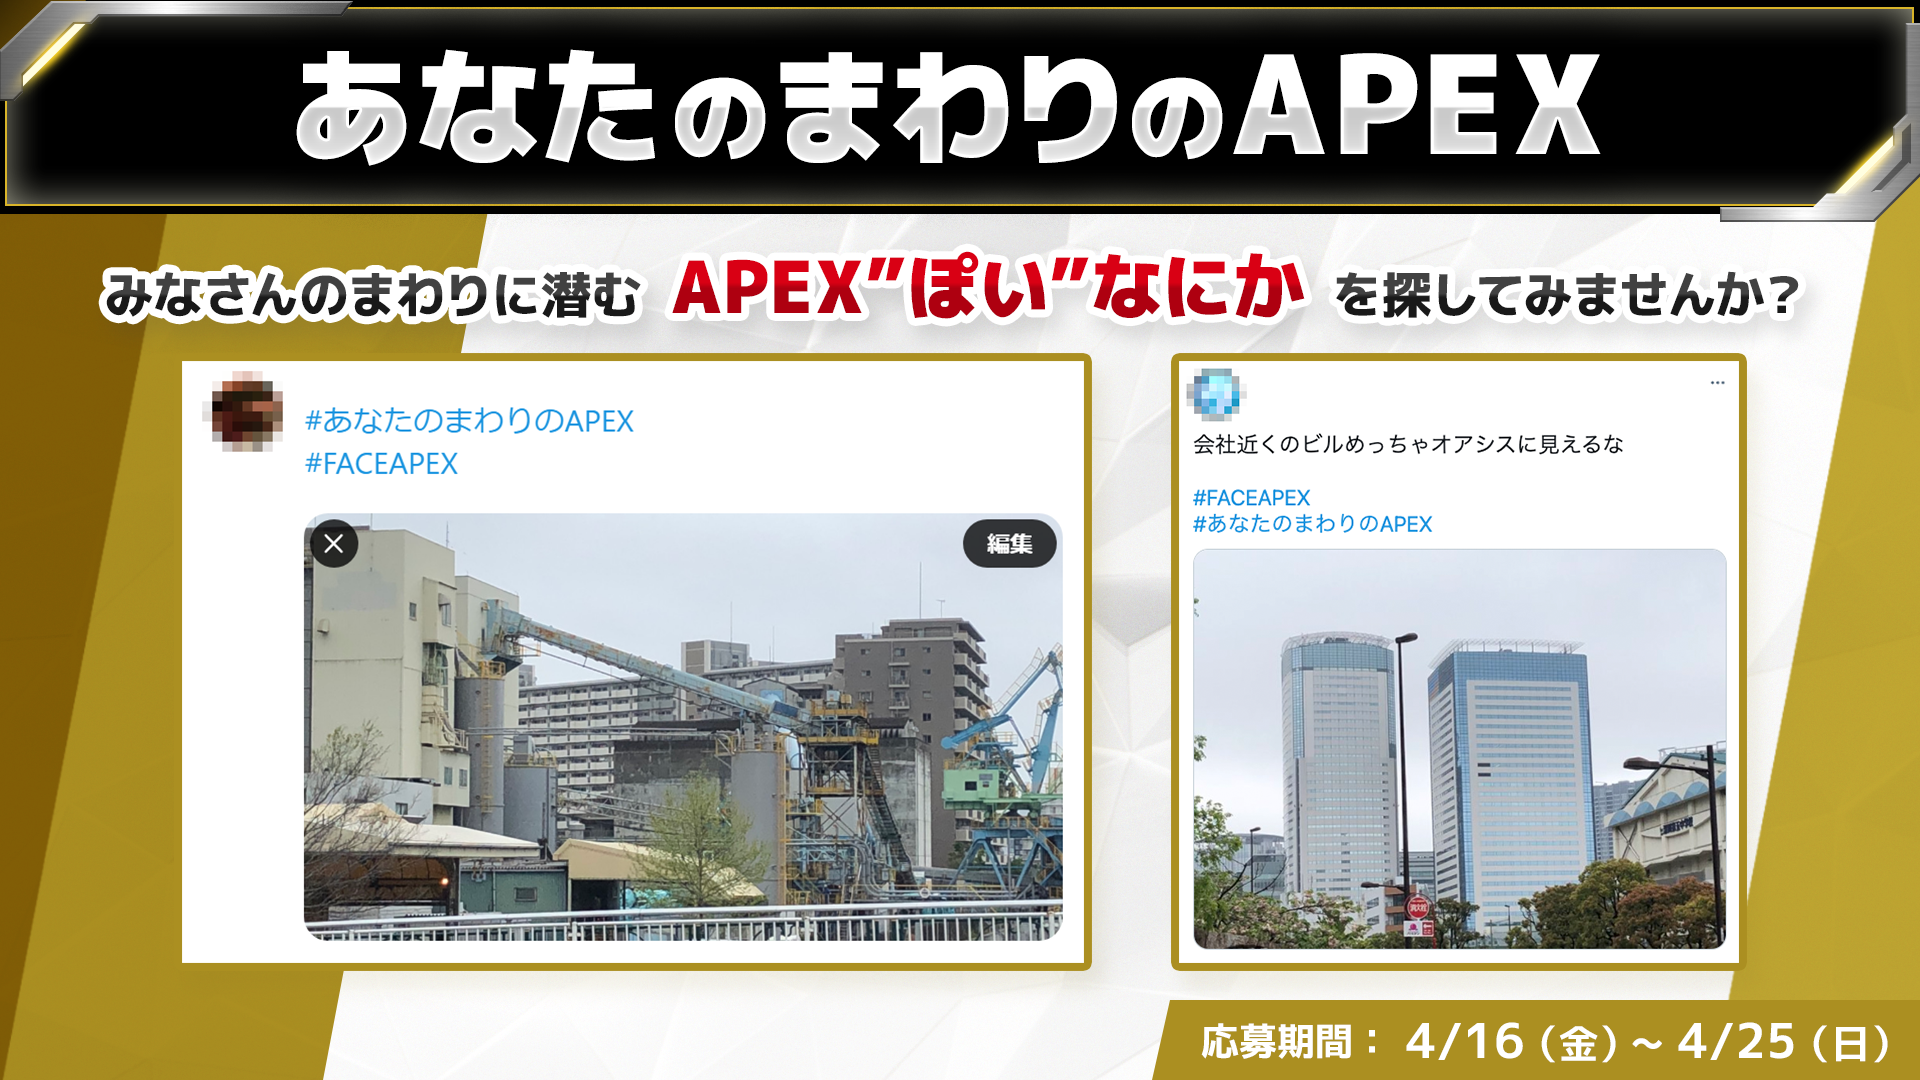 FACE_APEX_Slide_あなたのまわりのAPEX_2_v02 (1).png